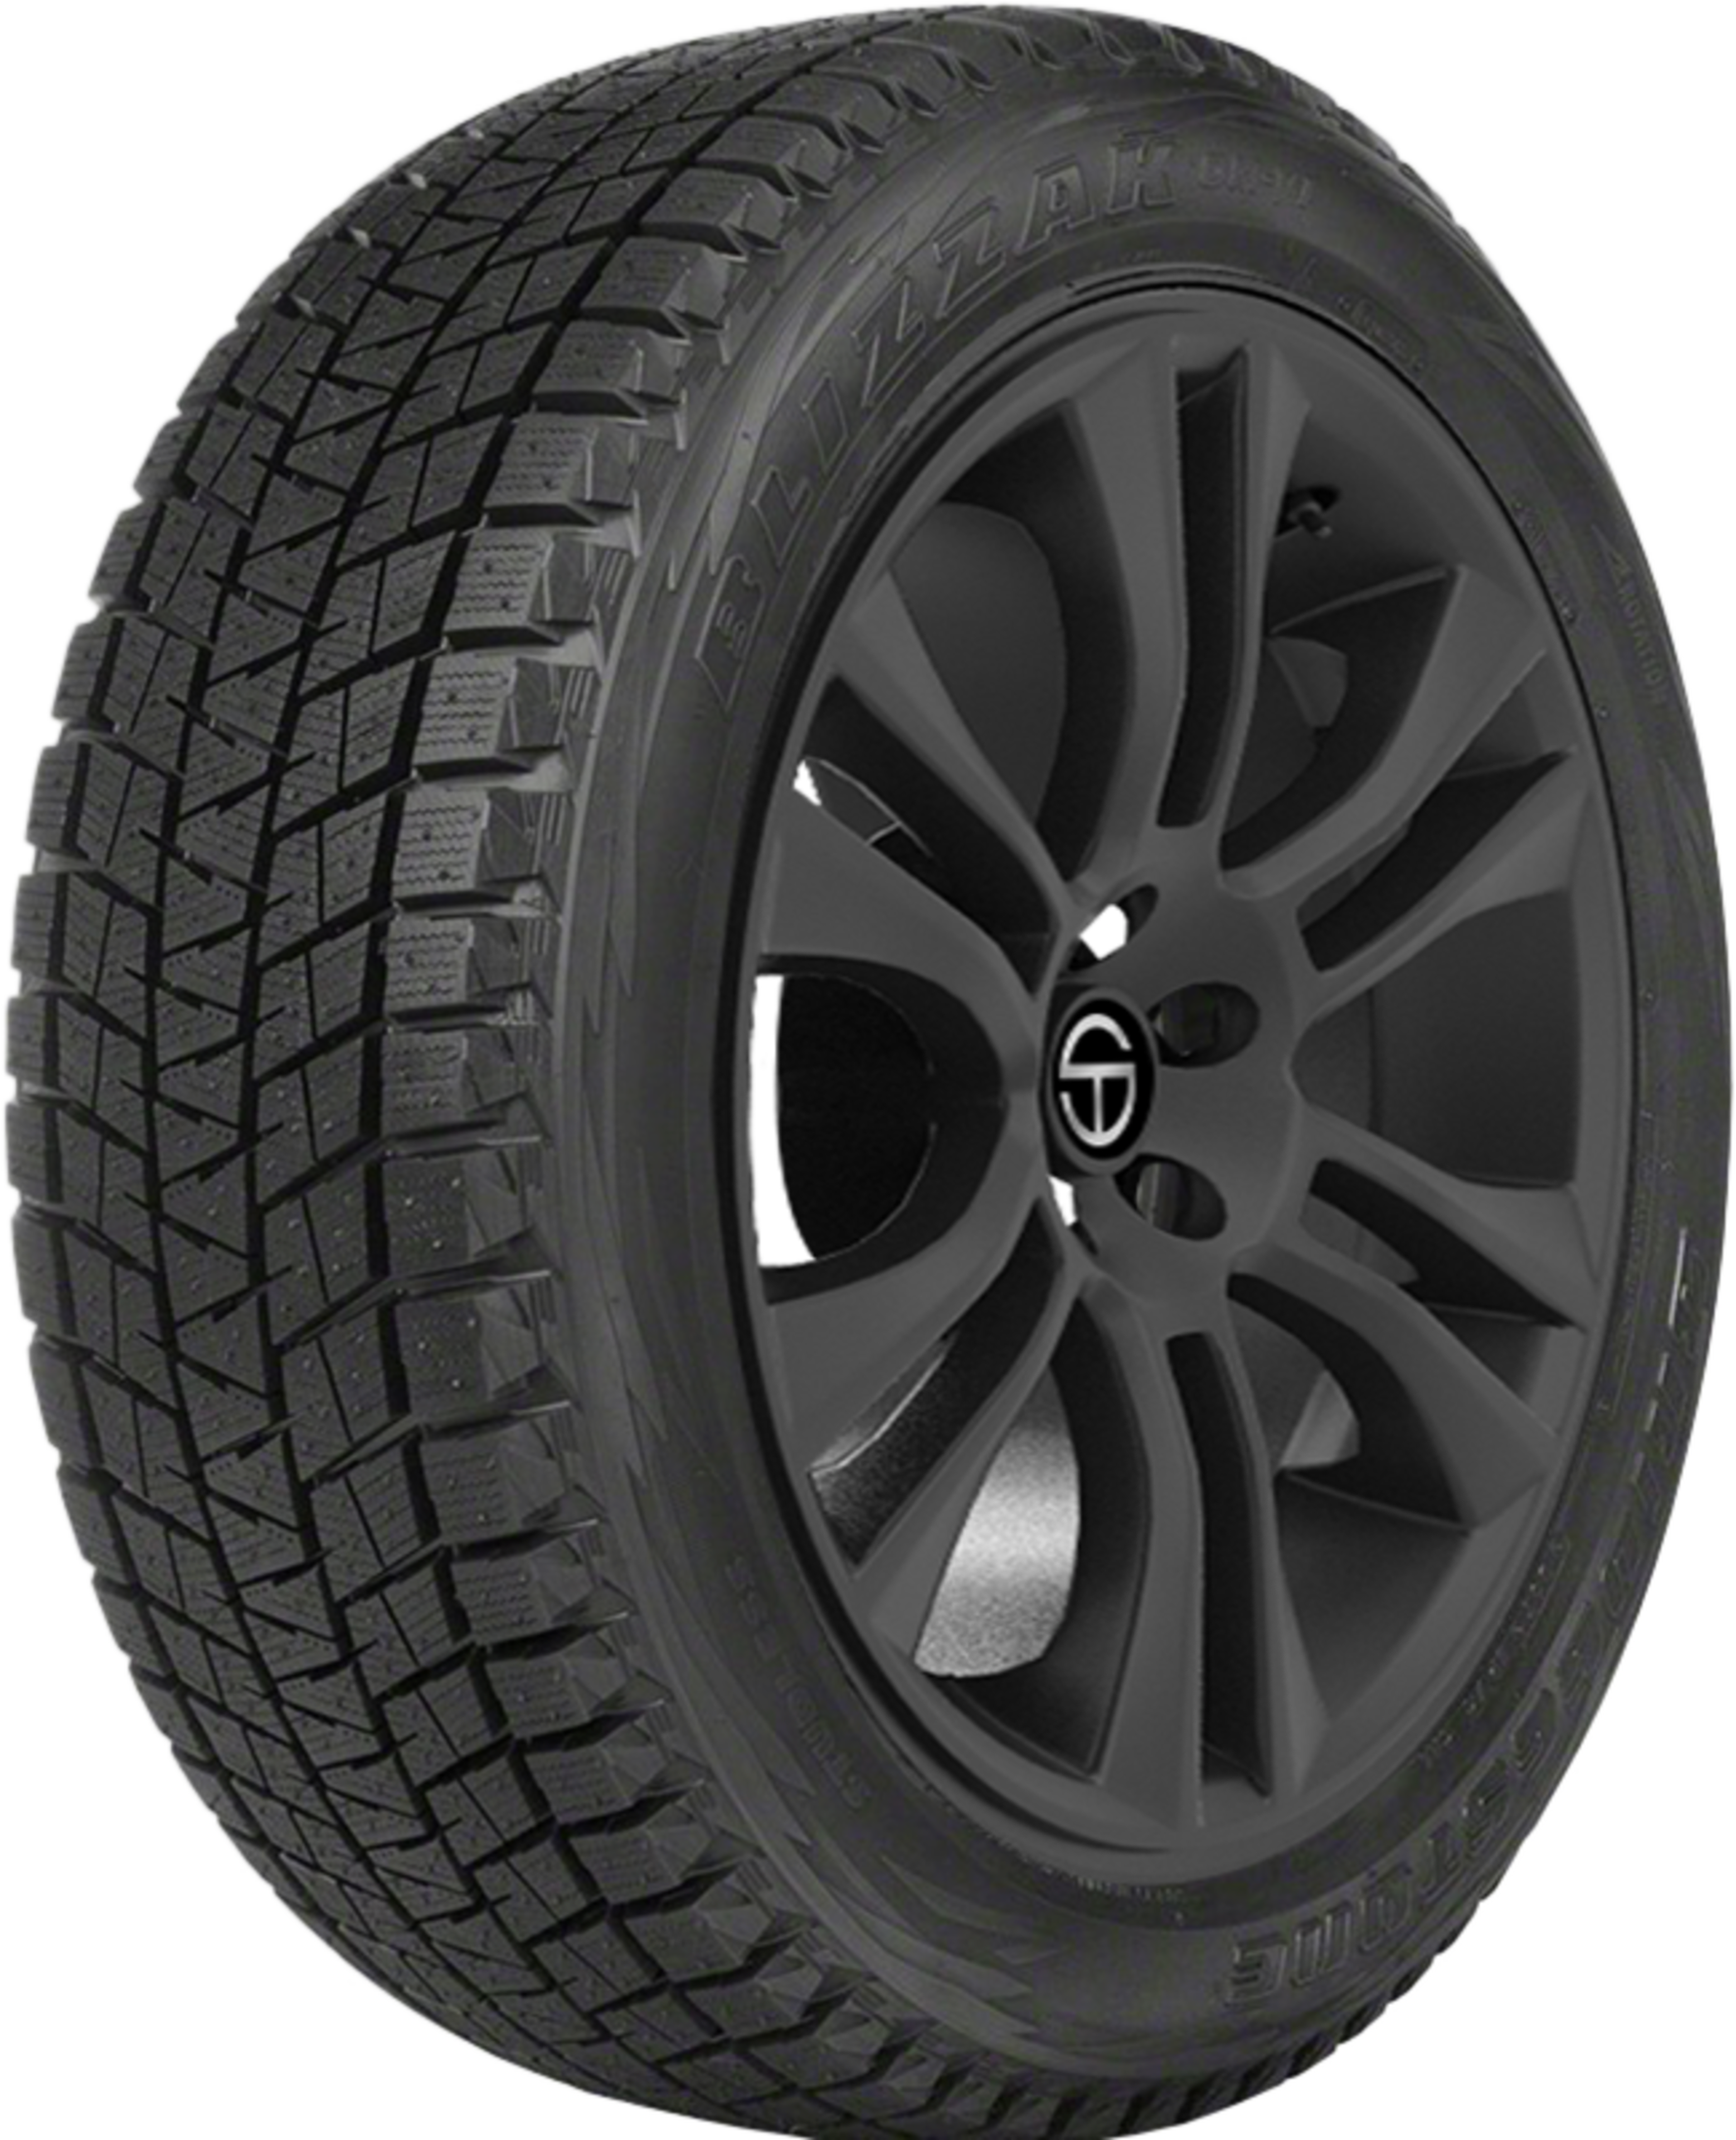 Buy Bridgestone Blizzak DM-V1 Tires Online | SimpleTire